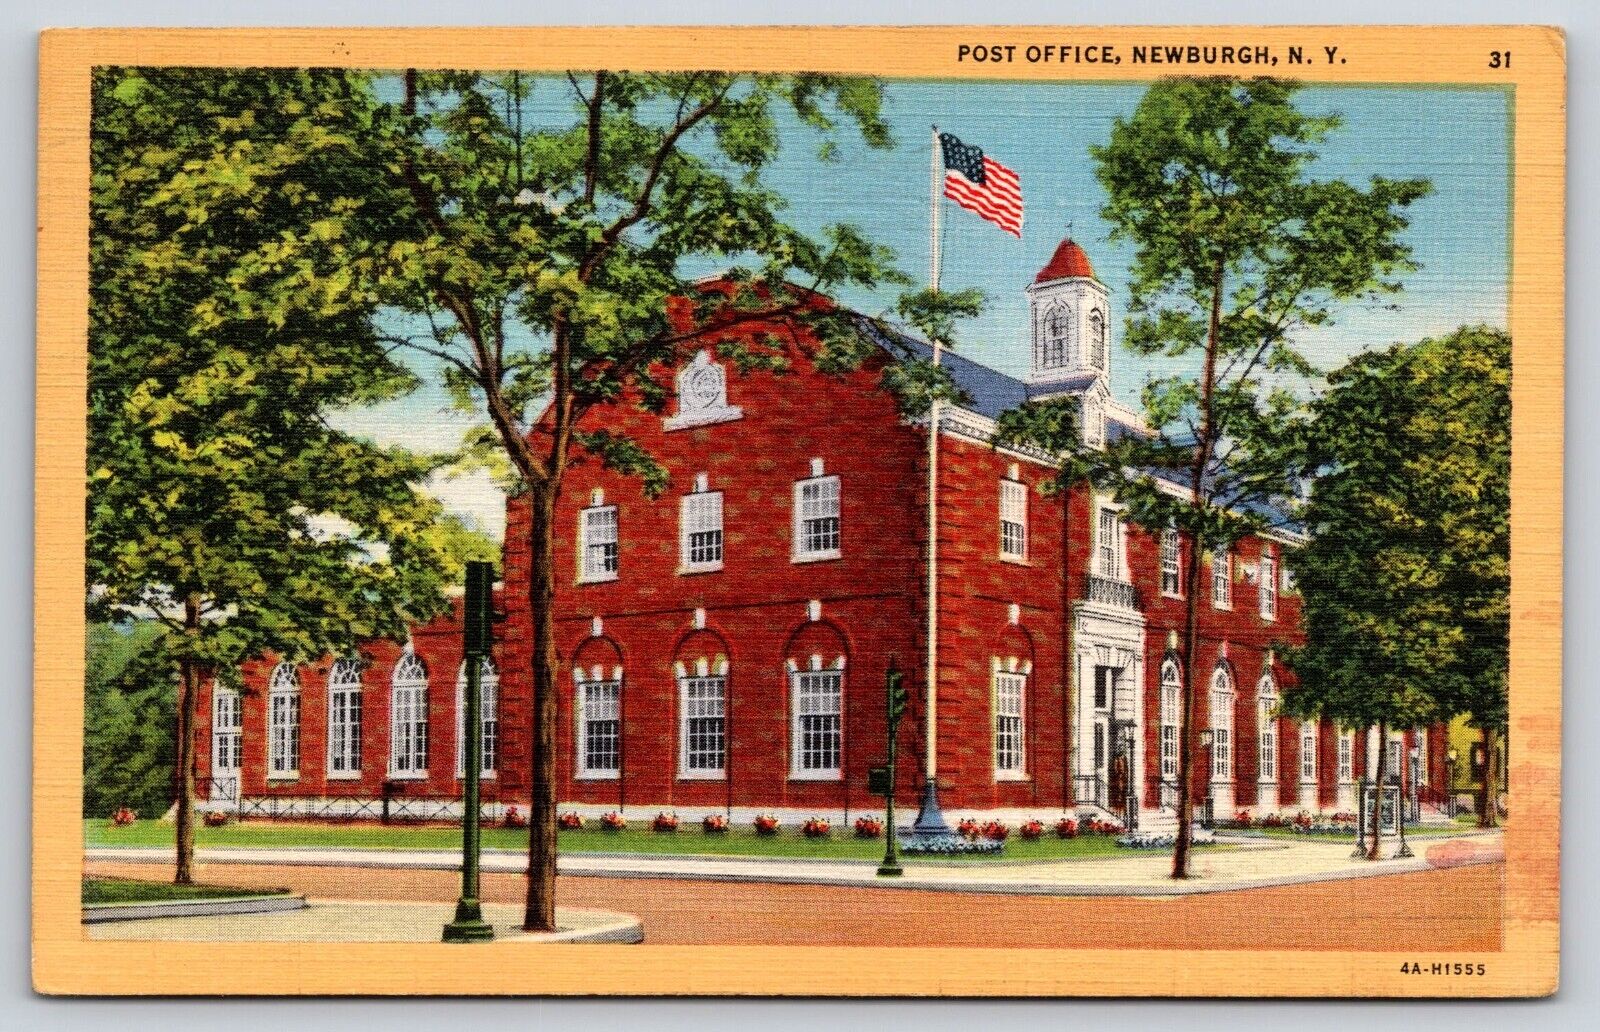 Original Old Vintage Linen Postcard Post Office Newburgh New York USA 1949